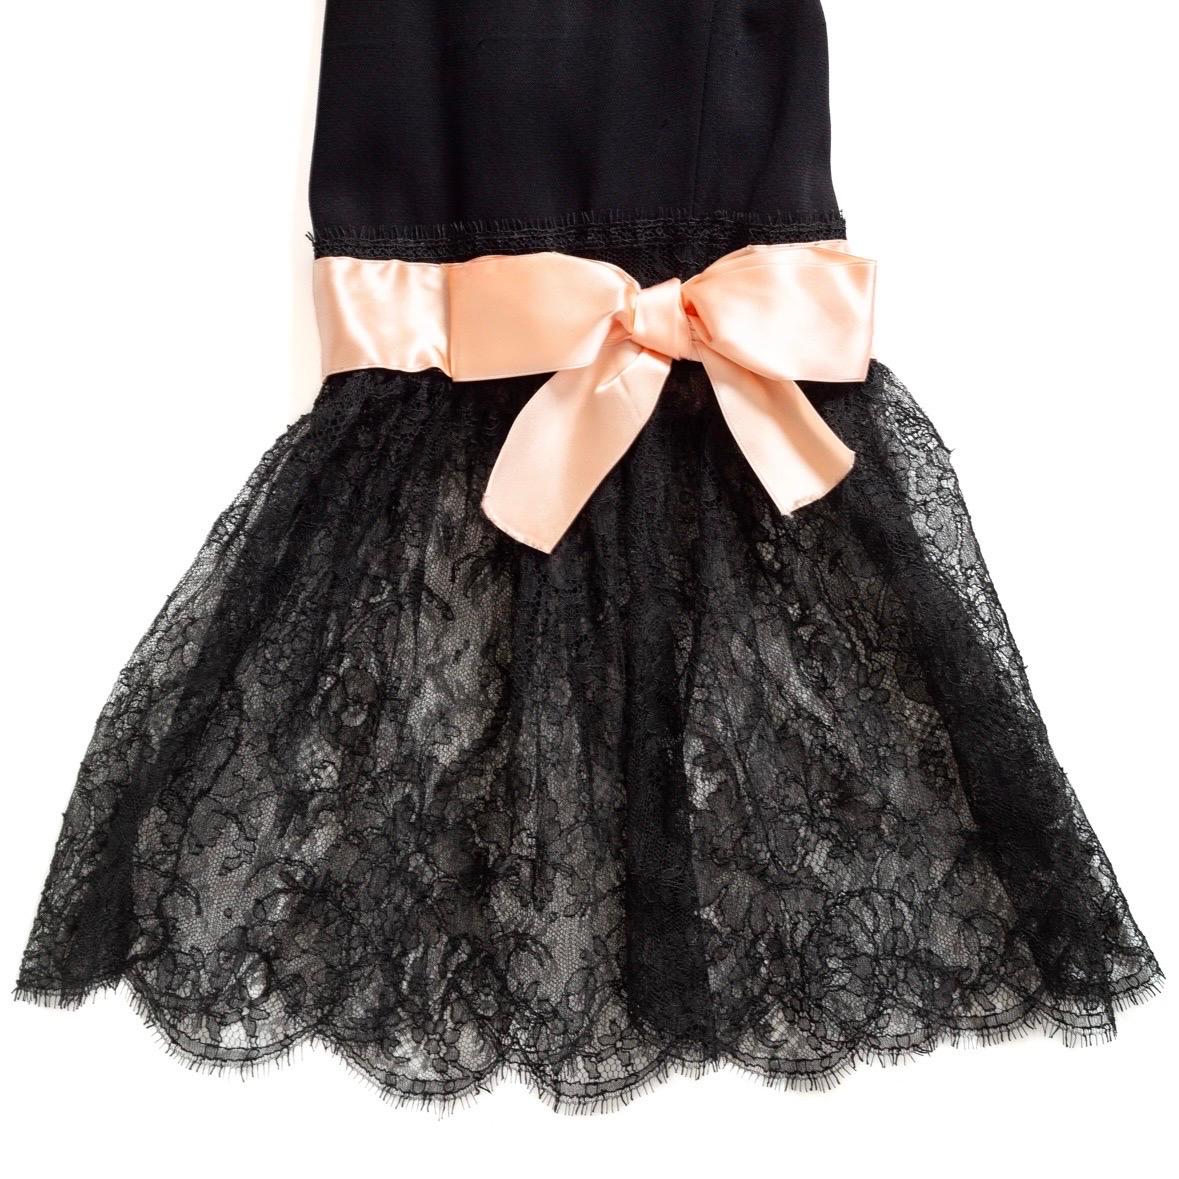 Balenciaga 1967 Haute Couture Black Chantilly Lace Pantalettes Dress For Sale 2